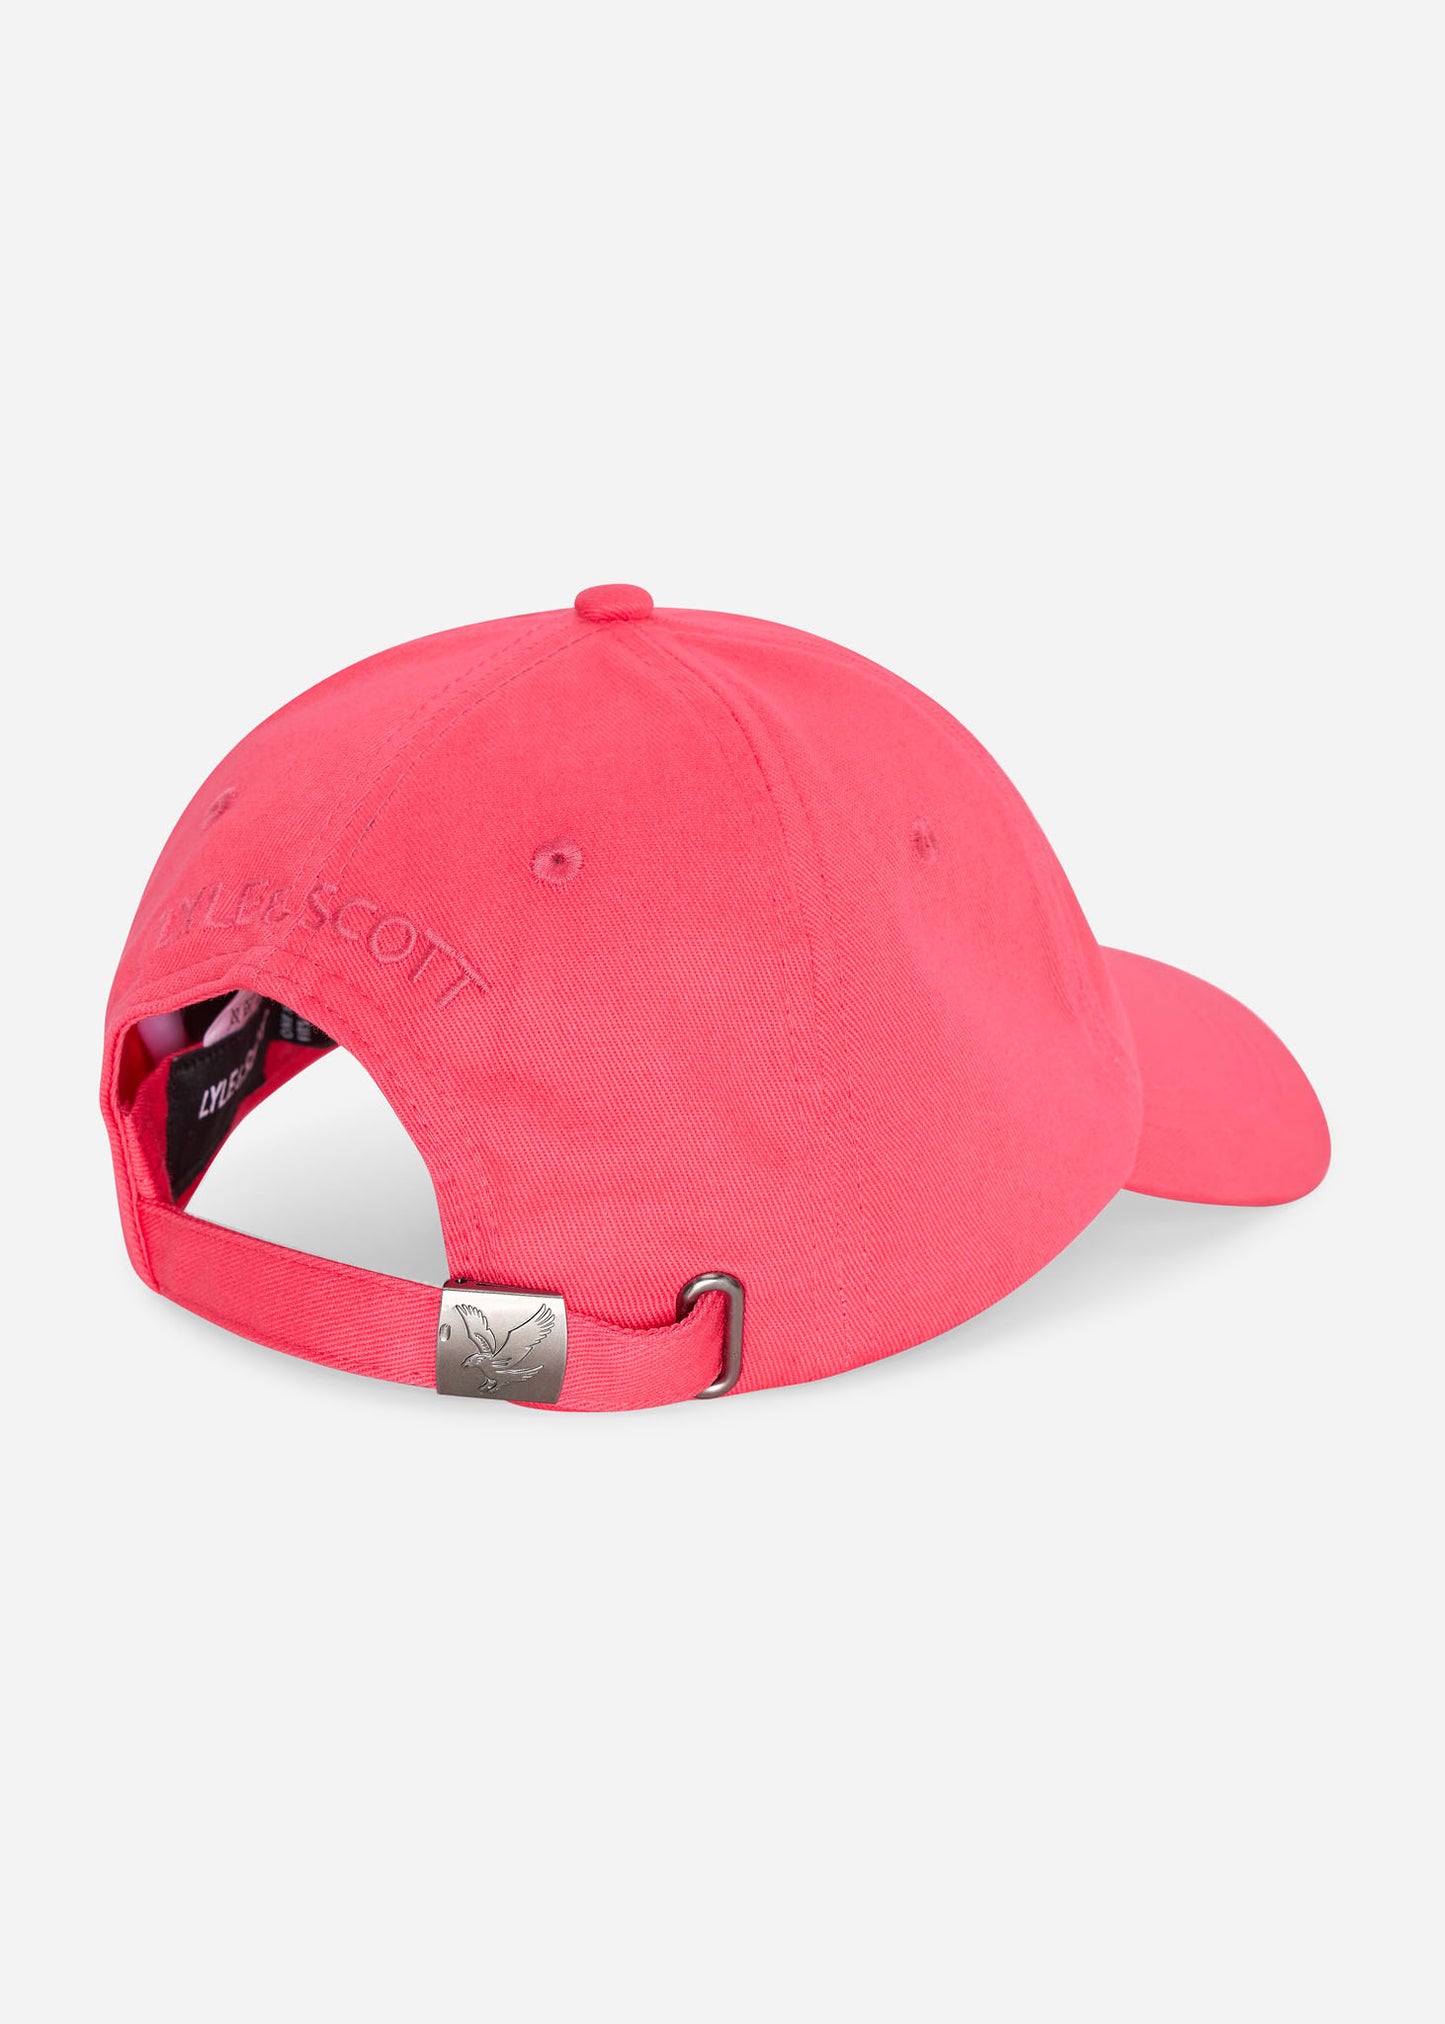 Lyle & Scott Petten  Baseball cap - electric pink 